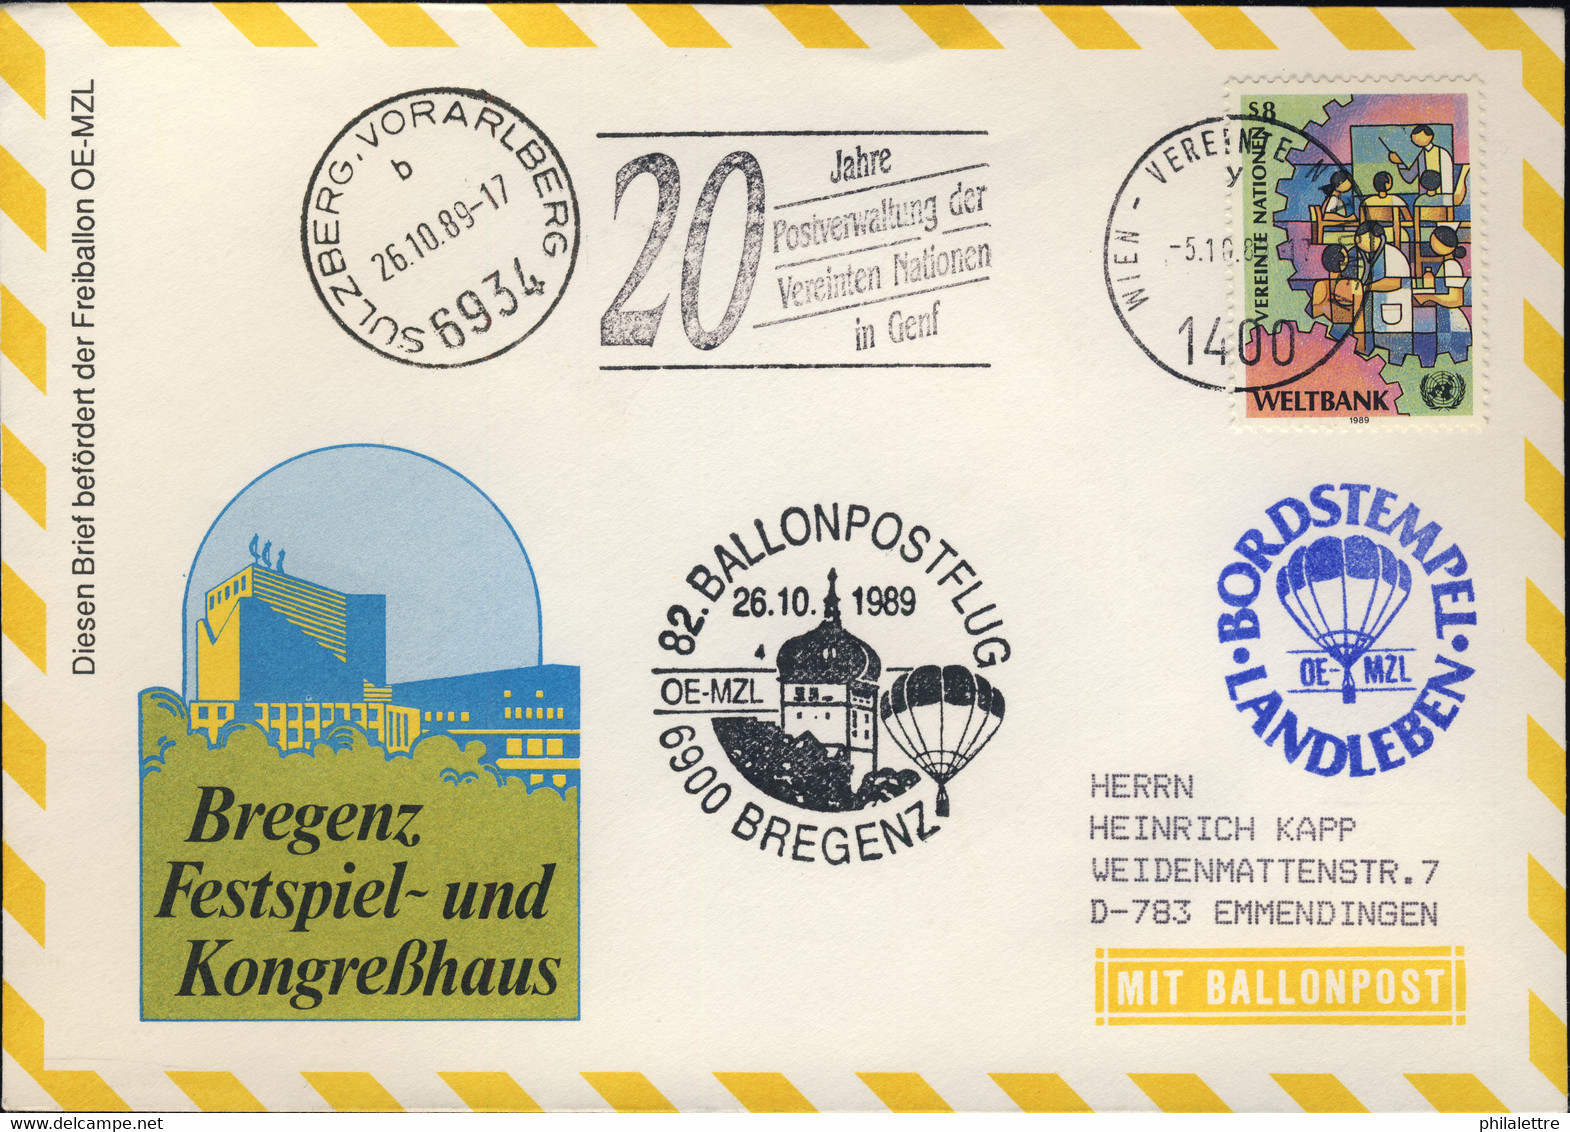 AUTRICHE / AUSTRIA / United Nations VIENNA 1989 82nd Balloon Post Flight Cover - Globos